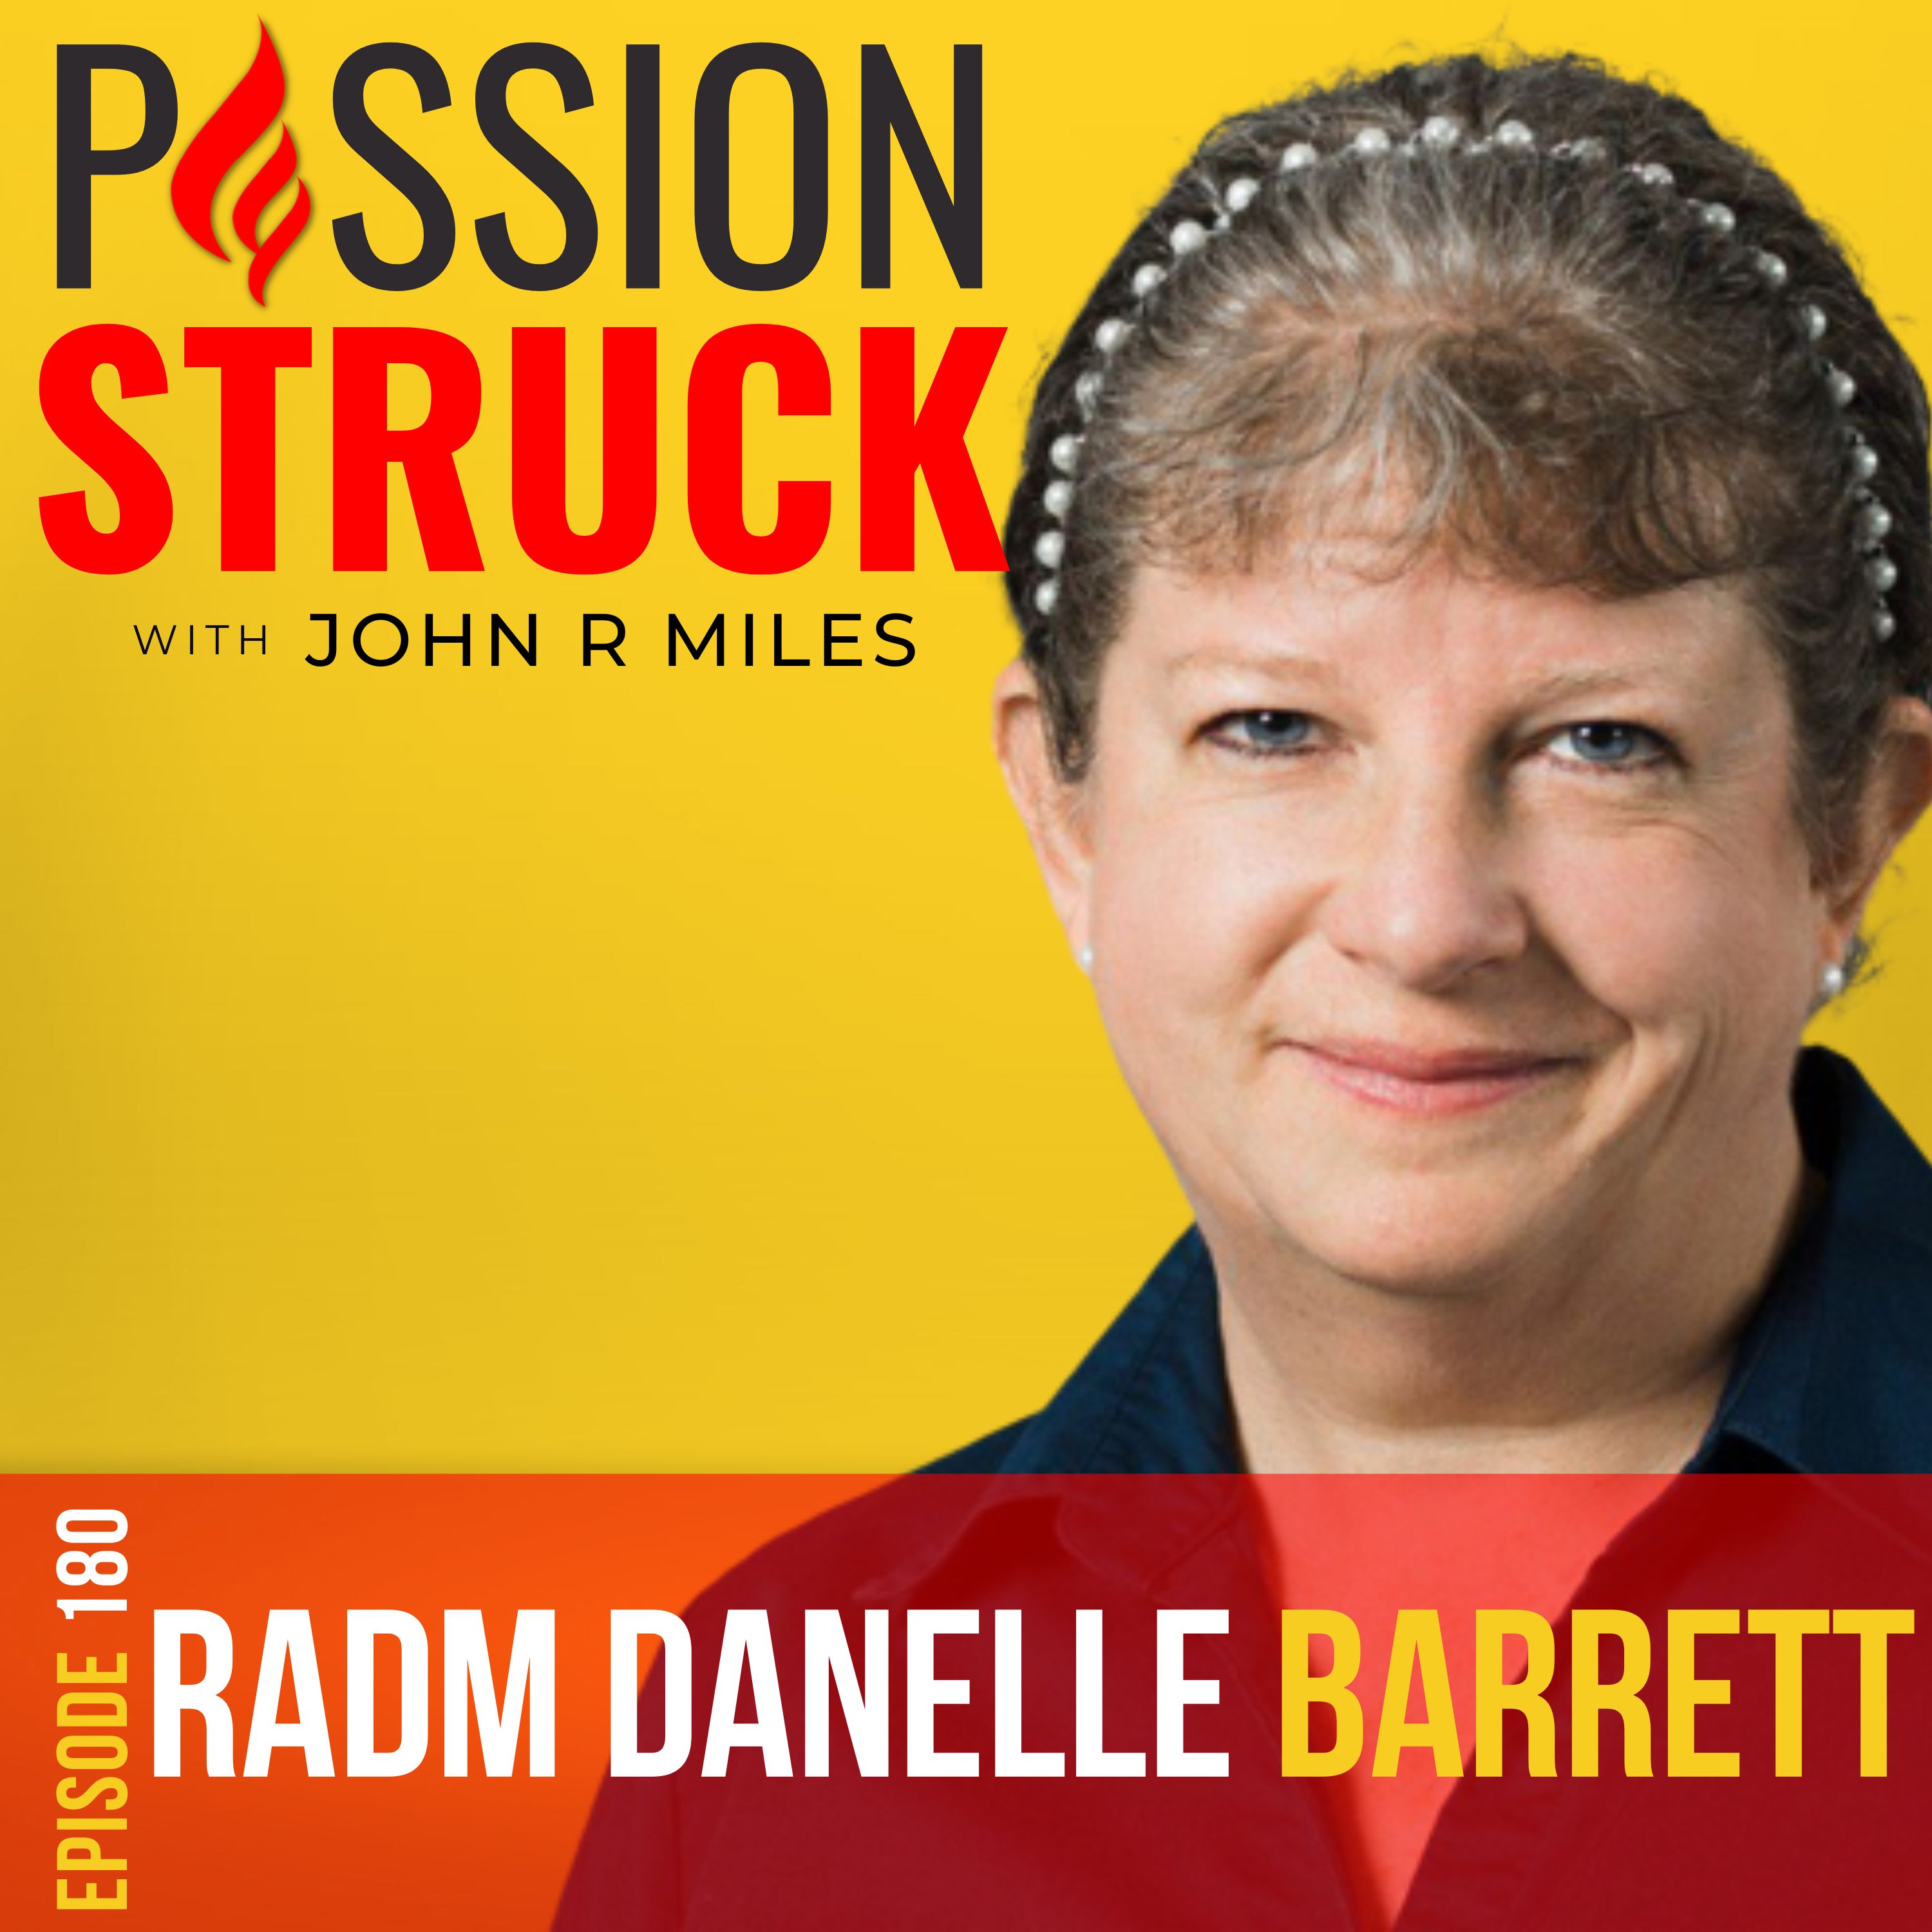 Passion Struck with John R. Miles album cover episode 180 with RADM Danelle Barrett